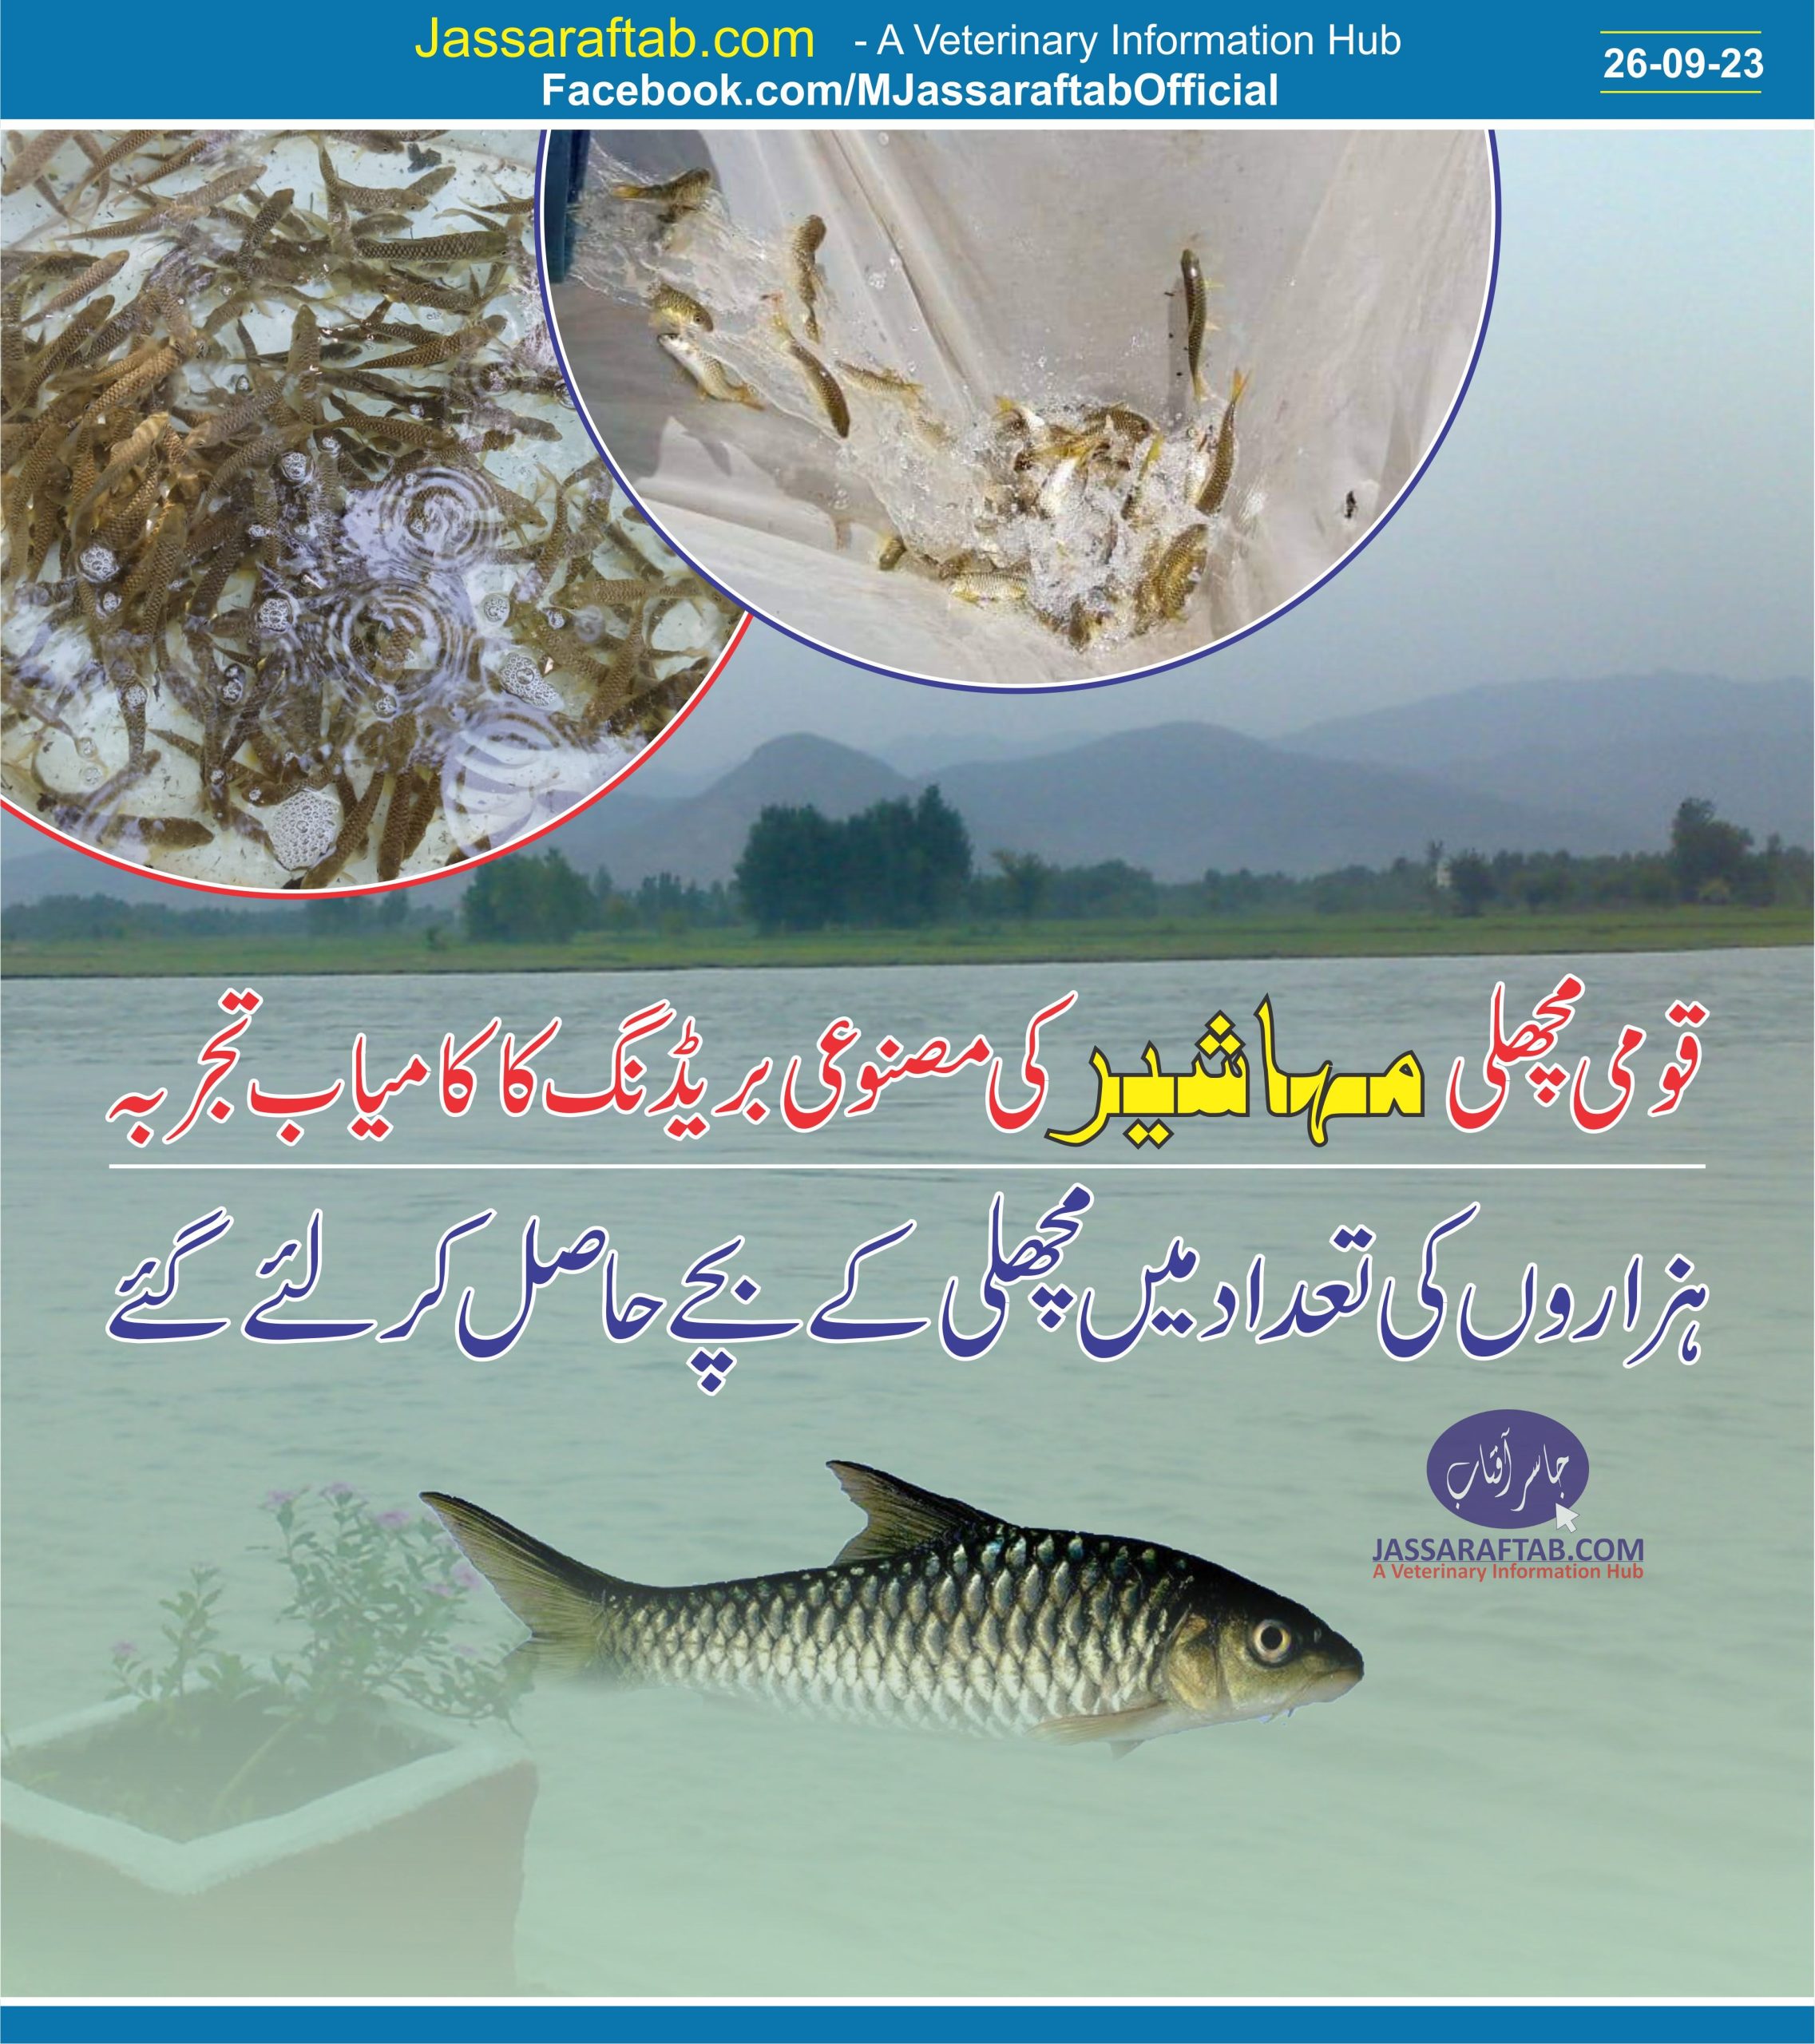 National Fish of Pakistan Mahseer breeding